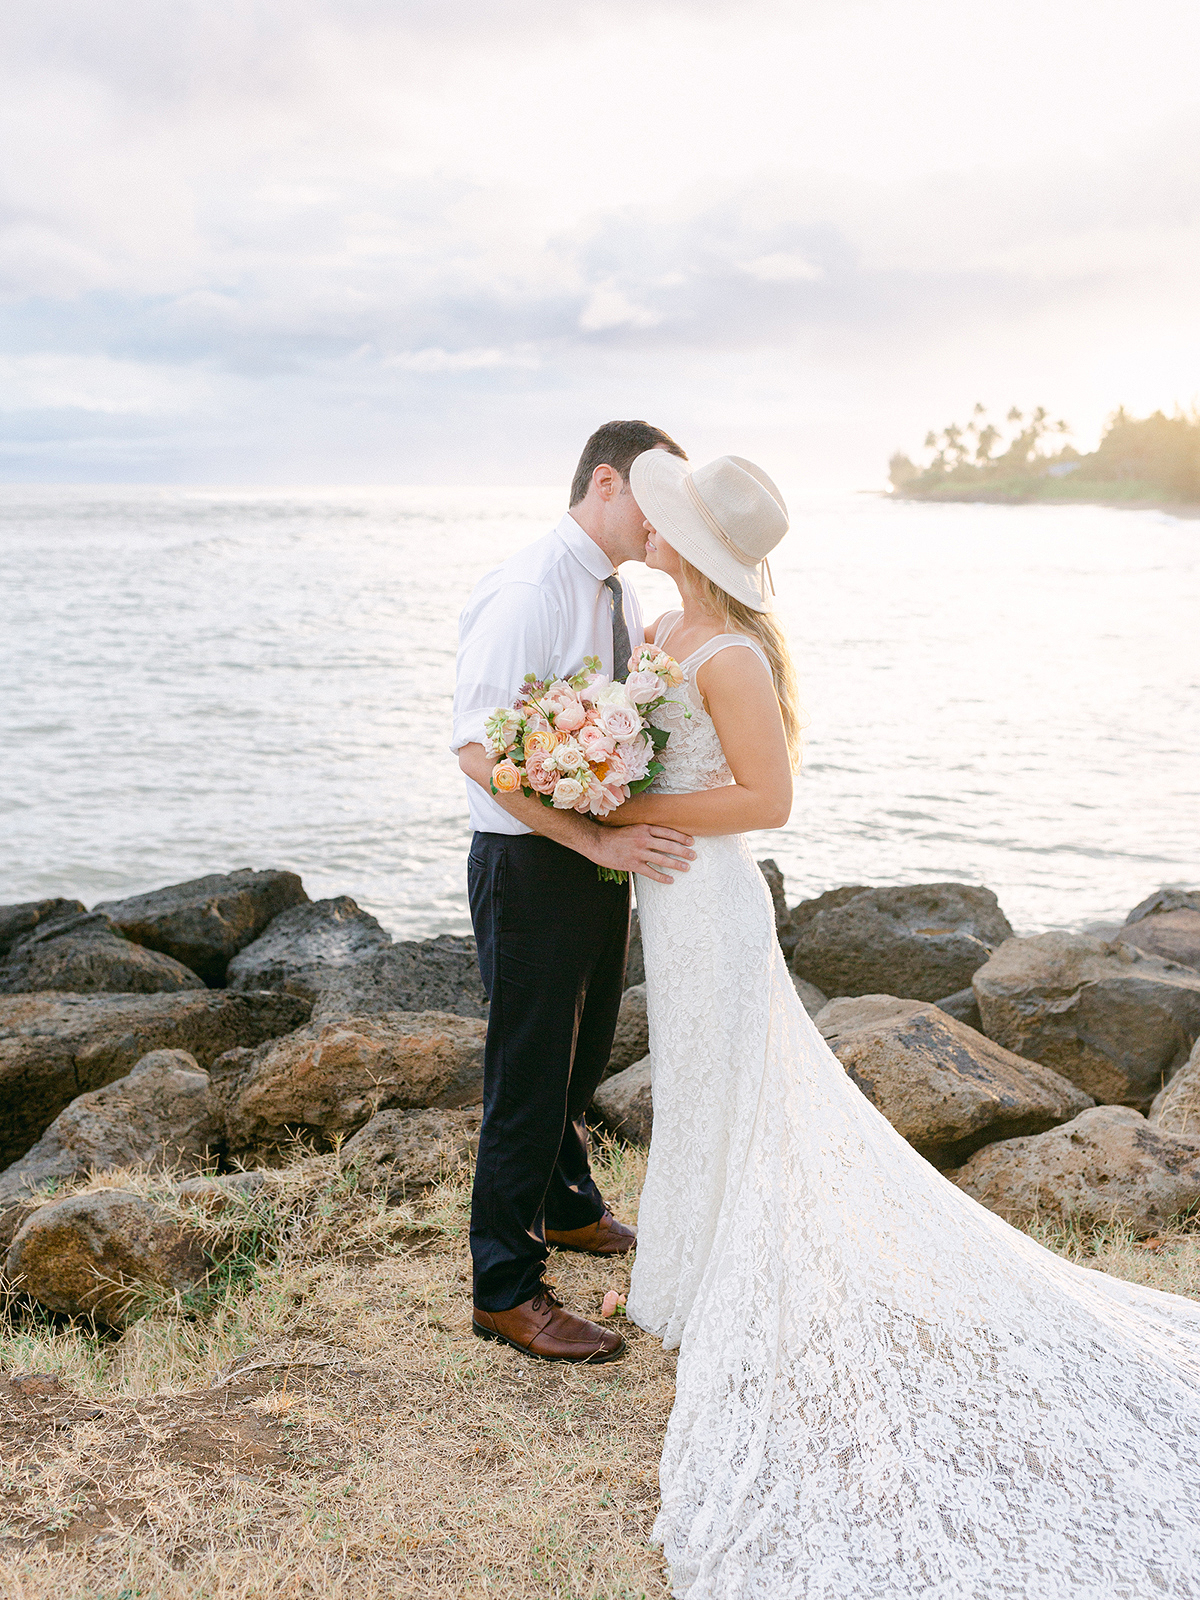 Destination elopement in Hawaii